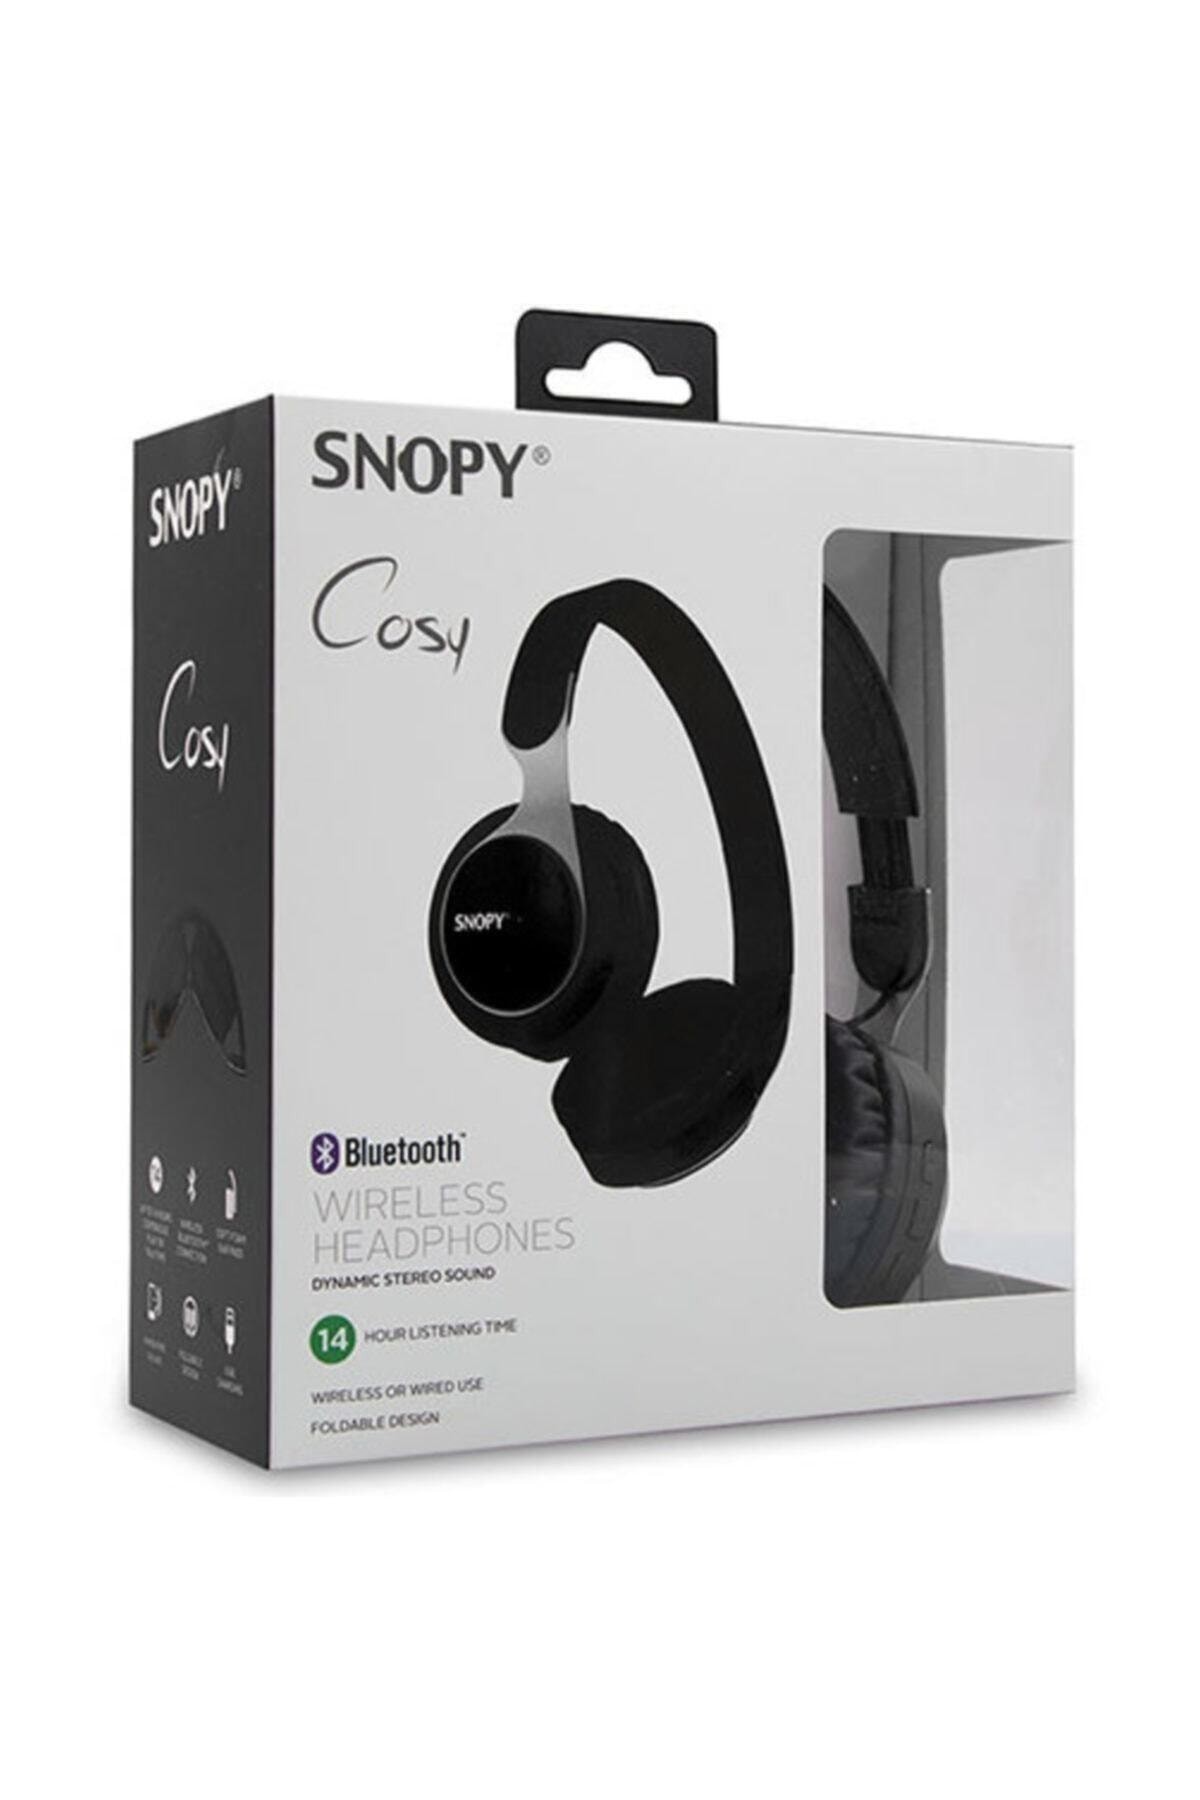 Siyah Snopy SN-34BT COSY Mobil Telefon Uyumlu Bluetooth Kablosuz Mikrofonlu Kulaklık